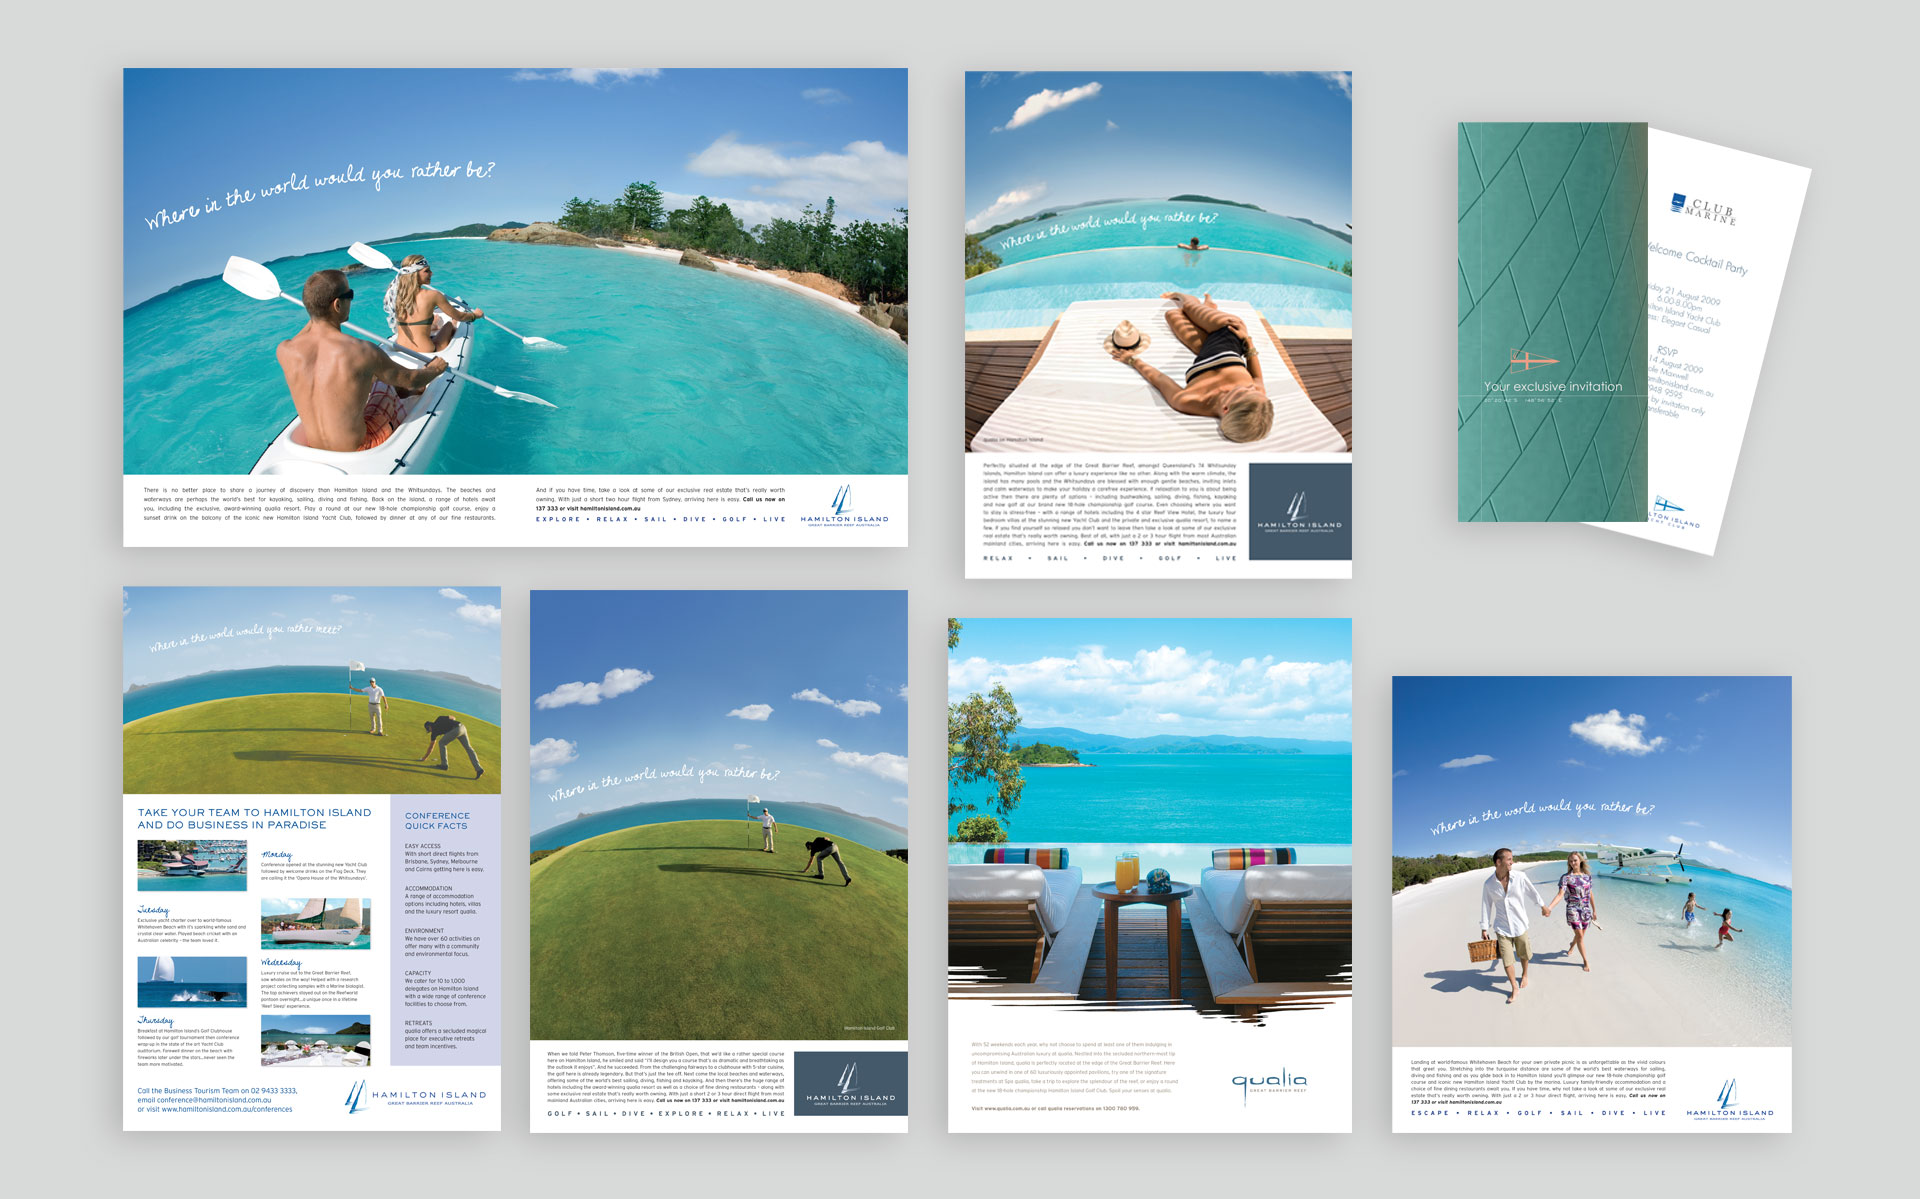 Hamilton Island marketing, advertising, publications & events designed by Amy Howard